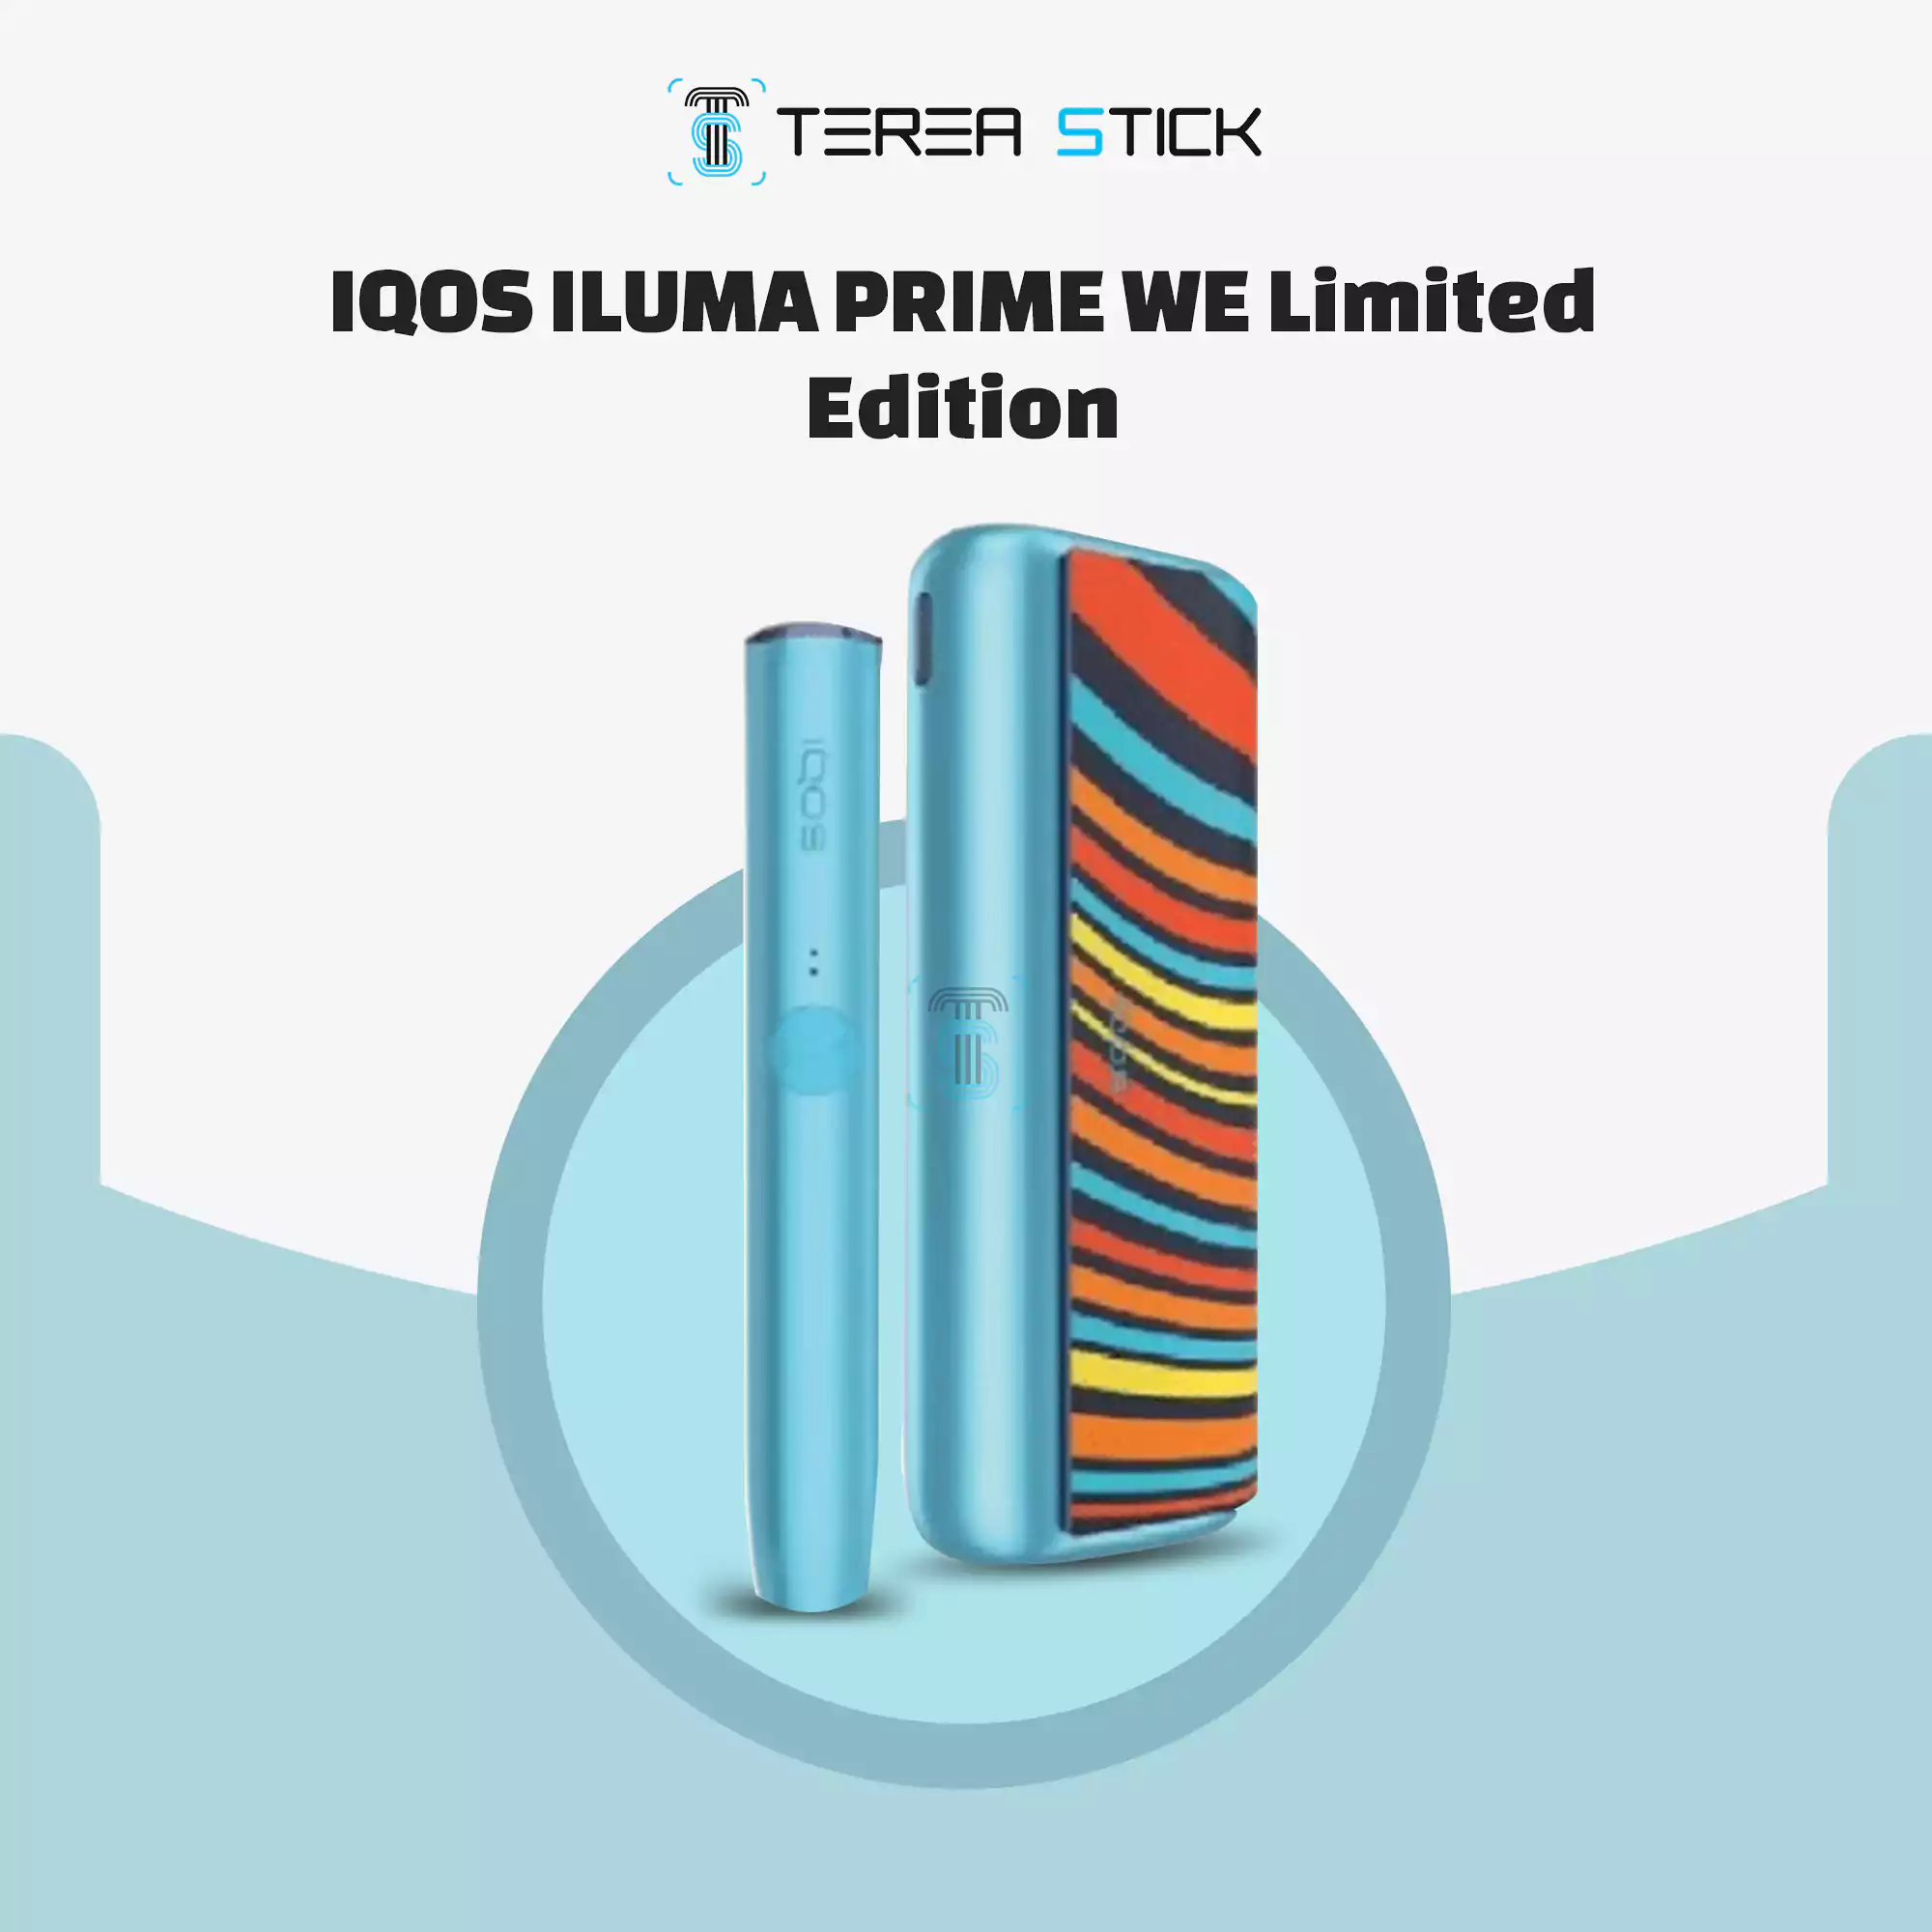 IQOS ILUMA PRIME WE Limited Edition UAE